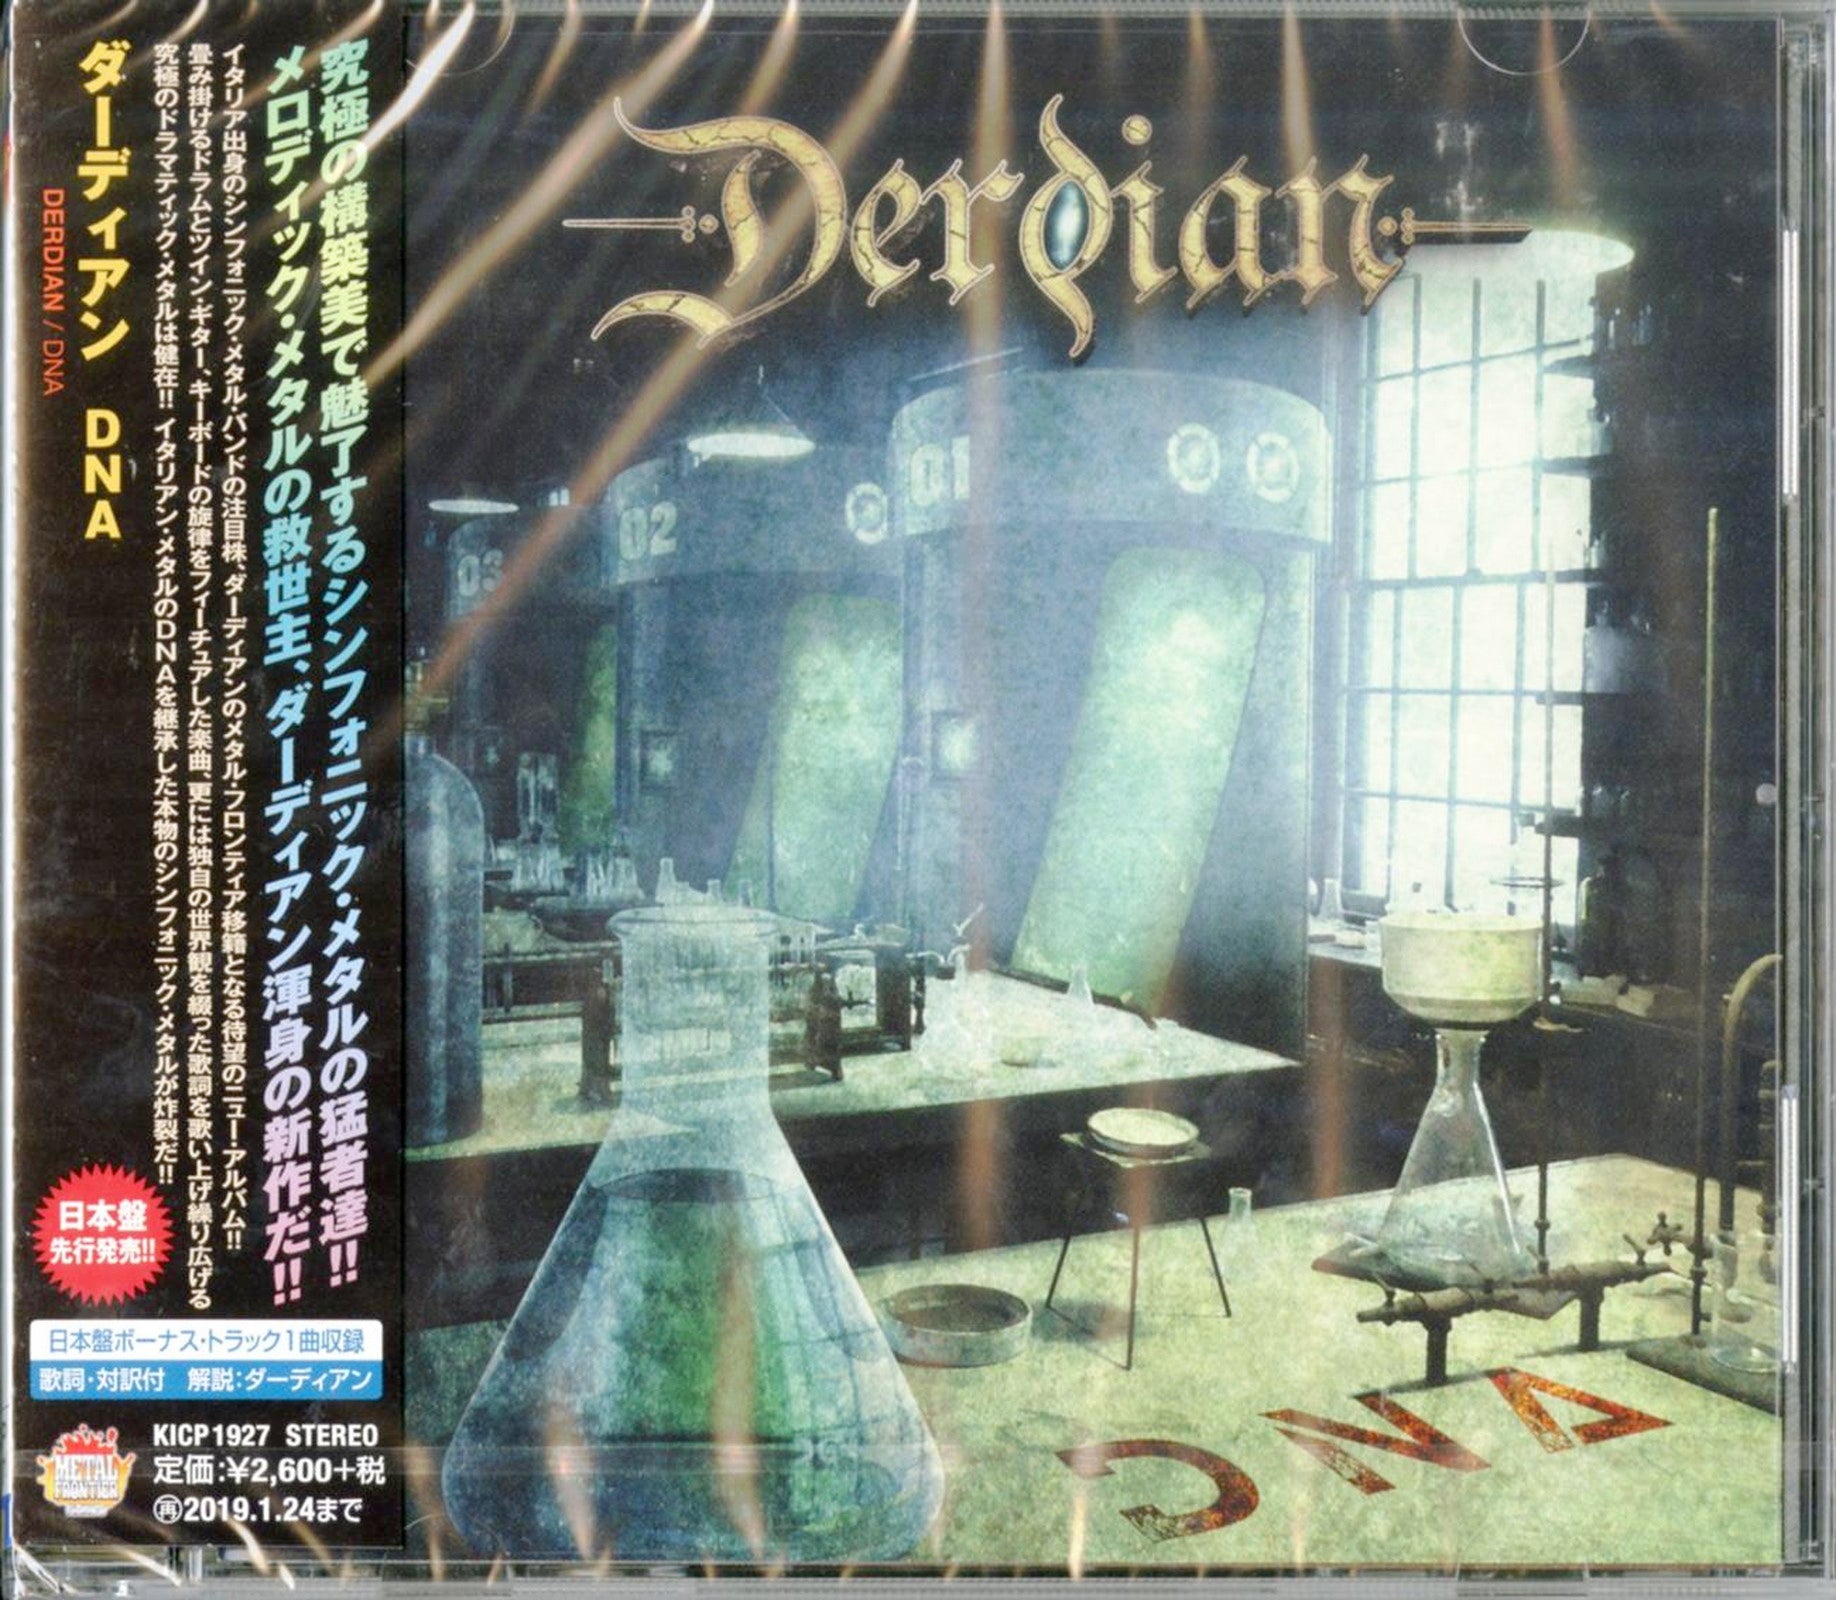 Derdian - Untitled - Japan CD Bonus Track – CDs Vinyl Japan Store 2018